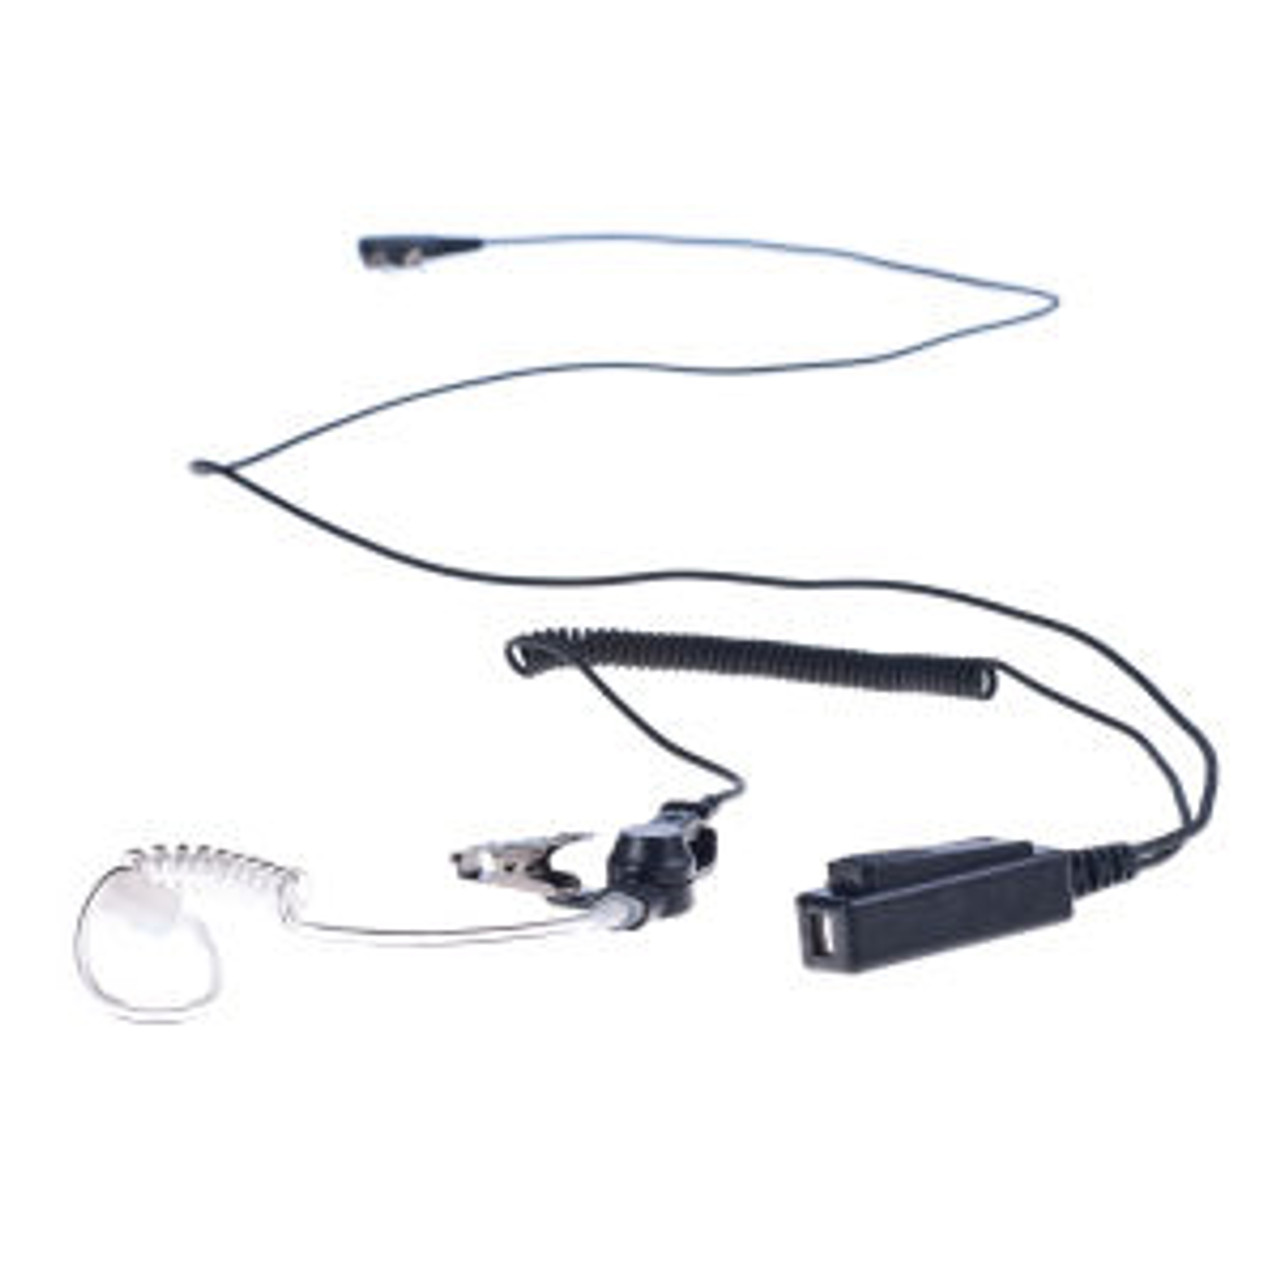 Kenwood TK-230 1-Wire Surveillance Kit